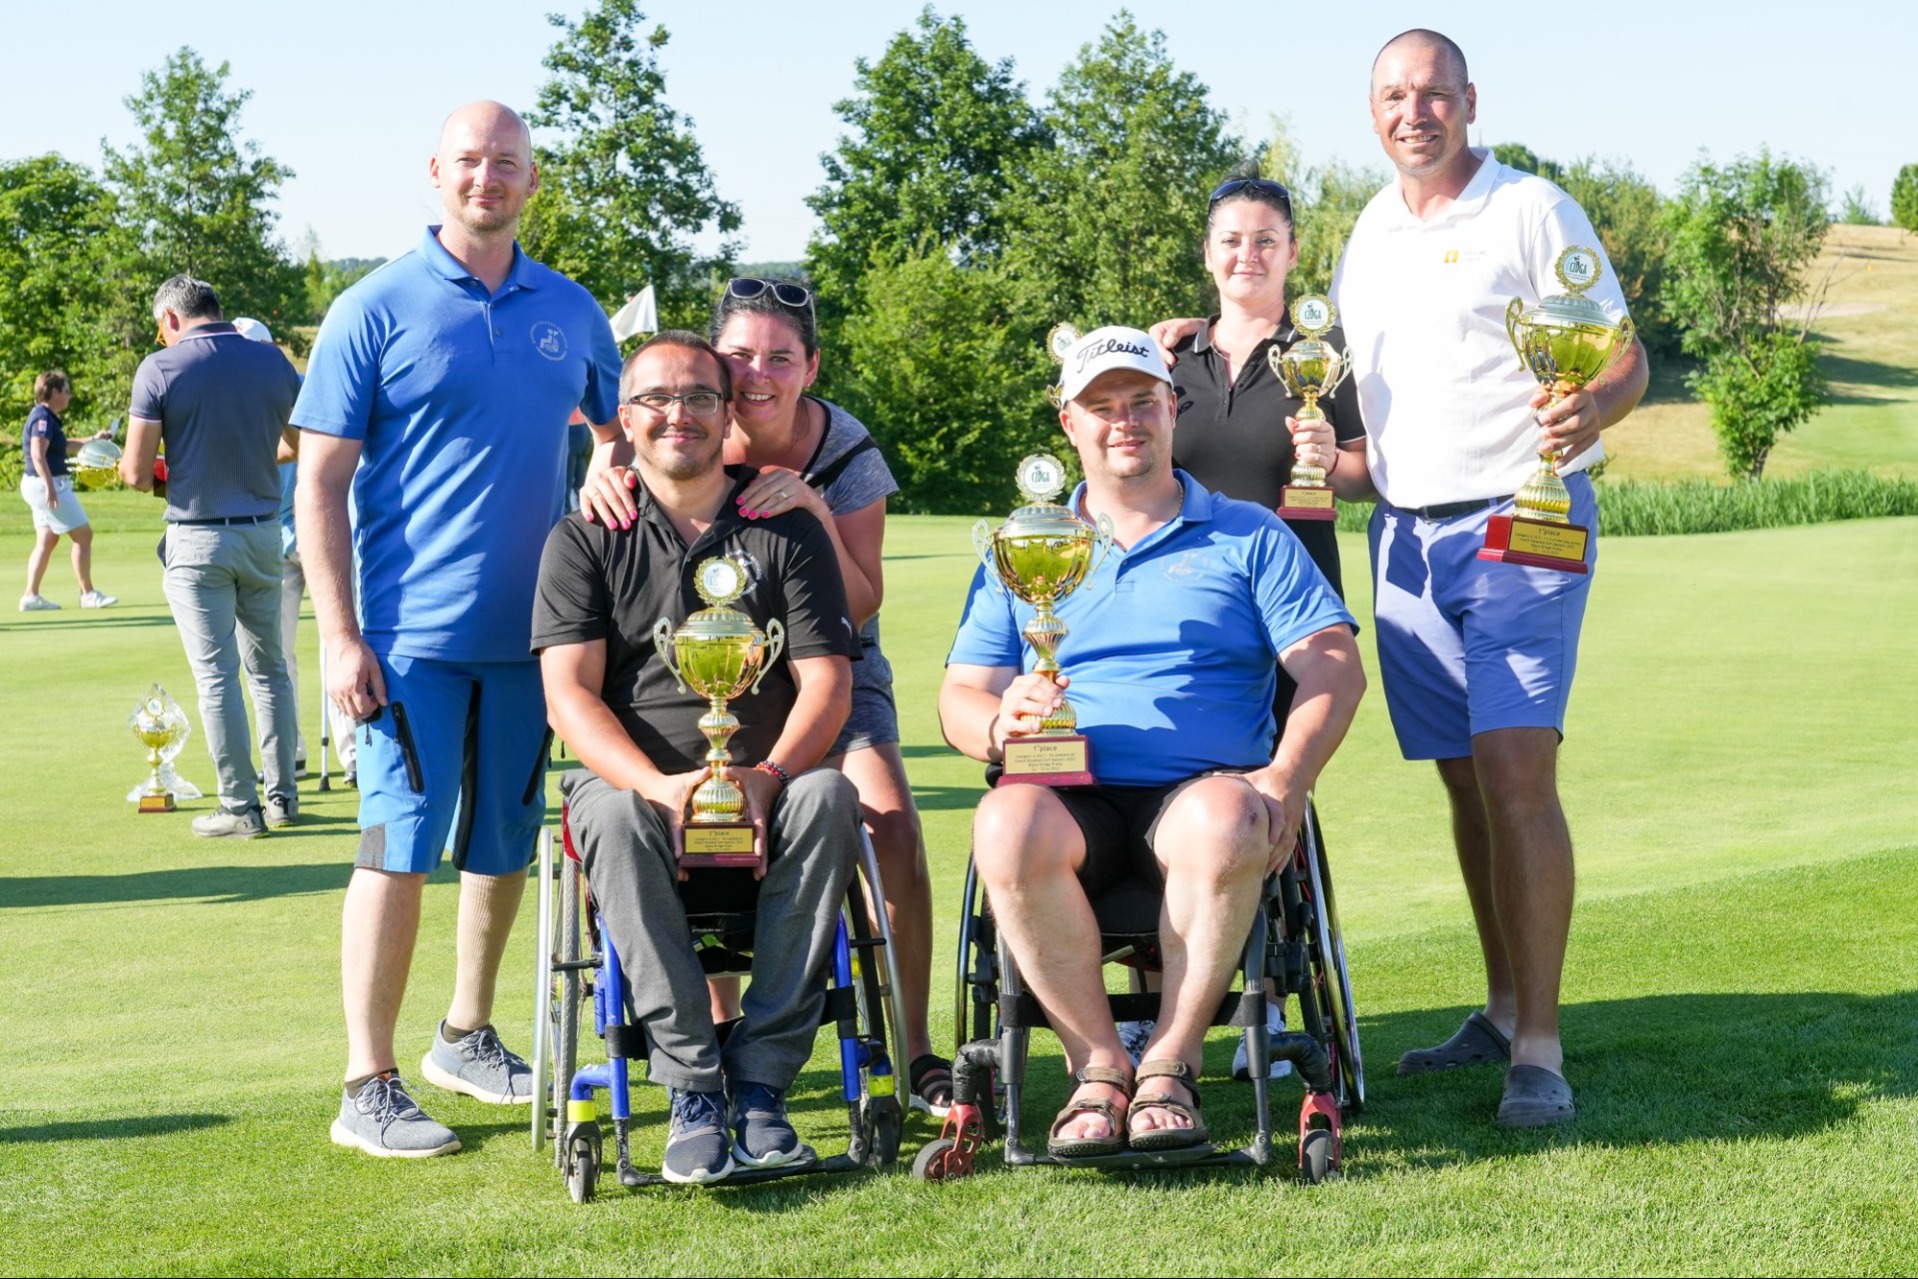 Czech Disabled Golf Masters